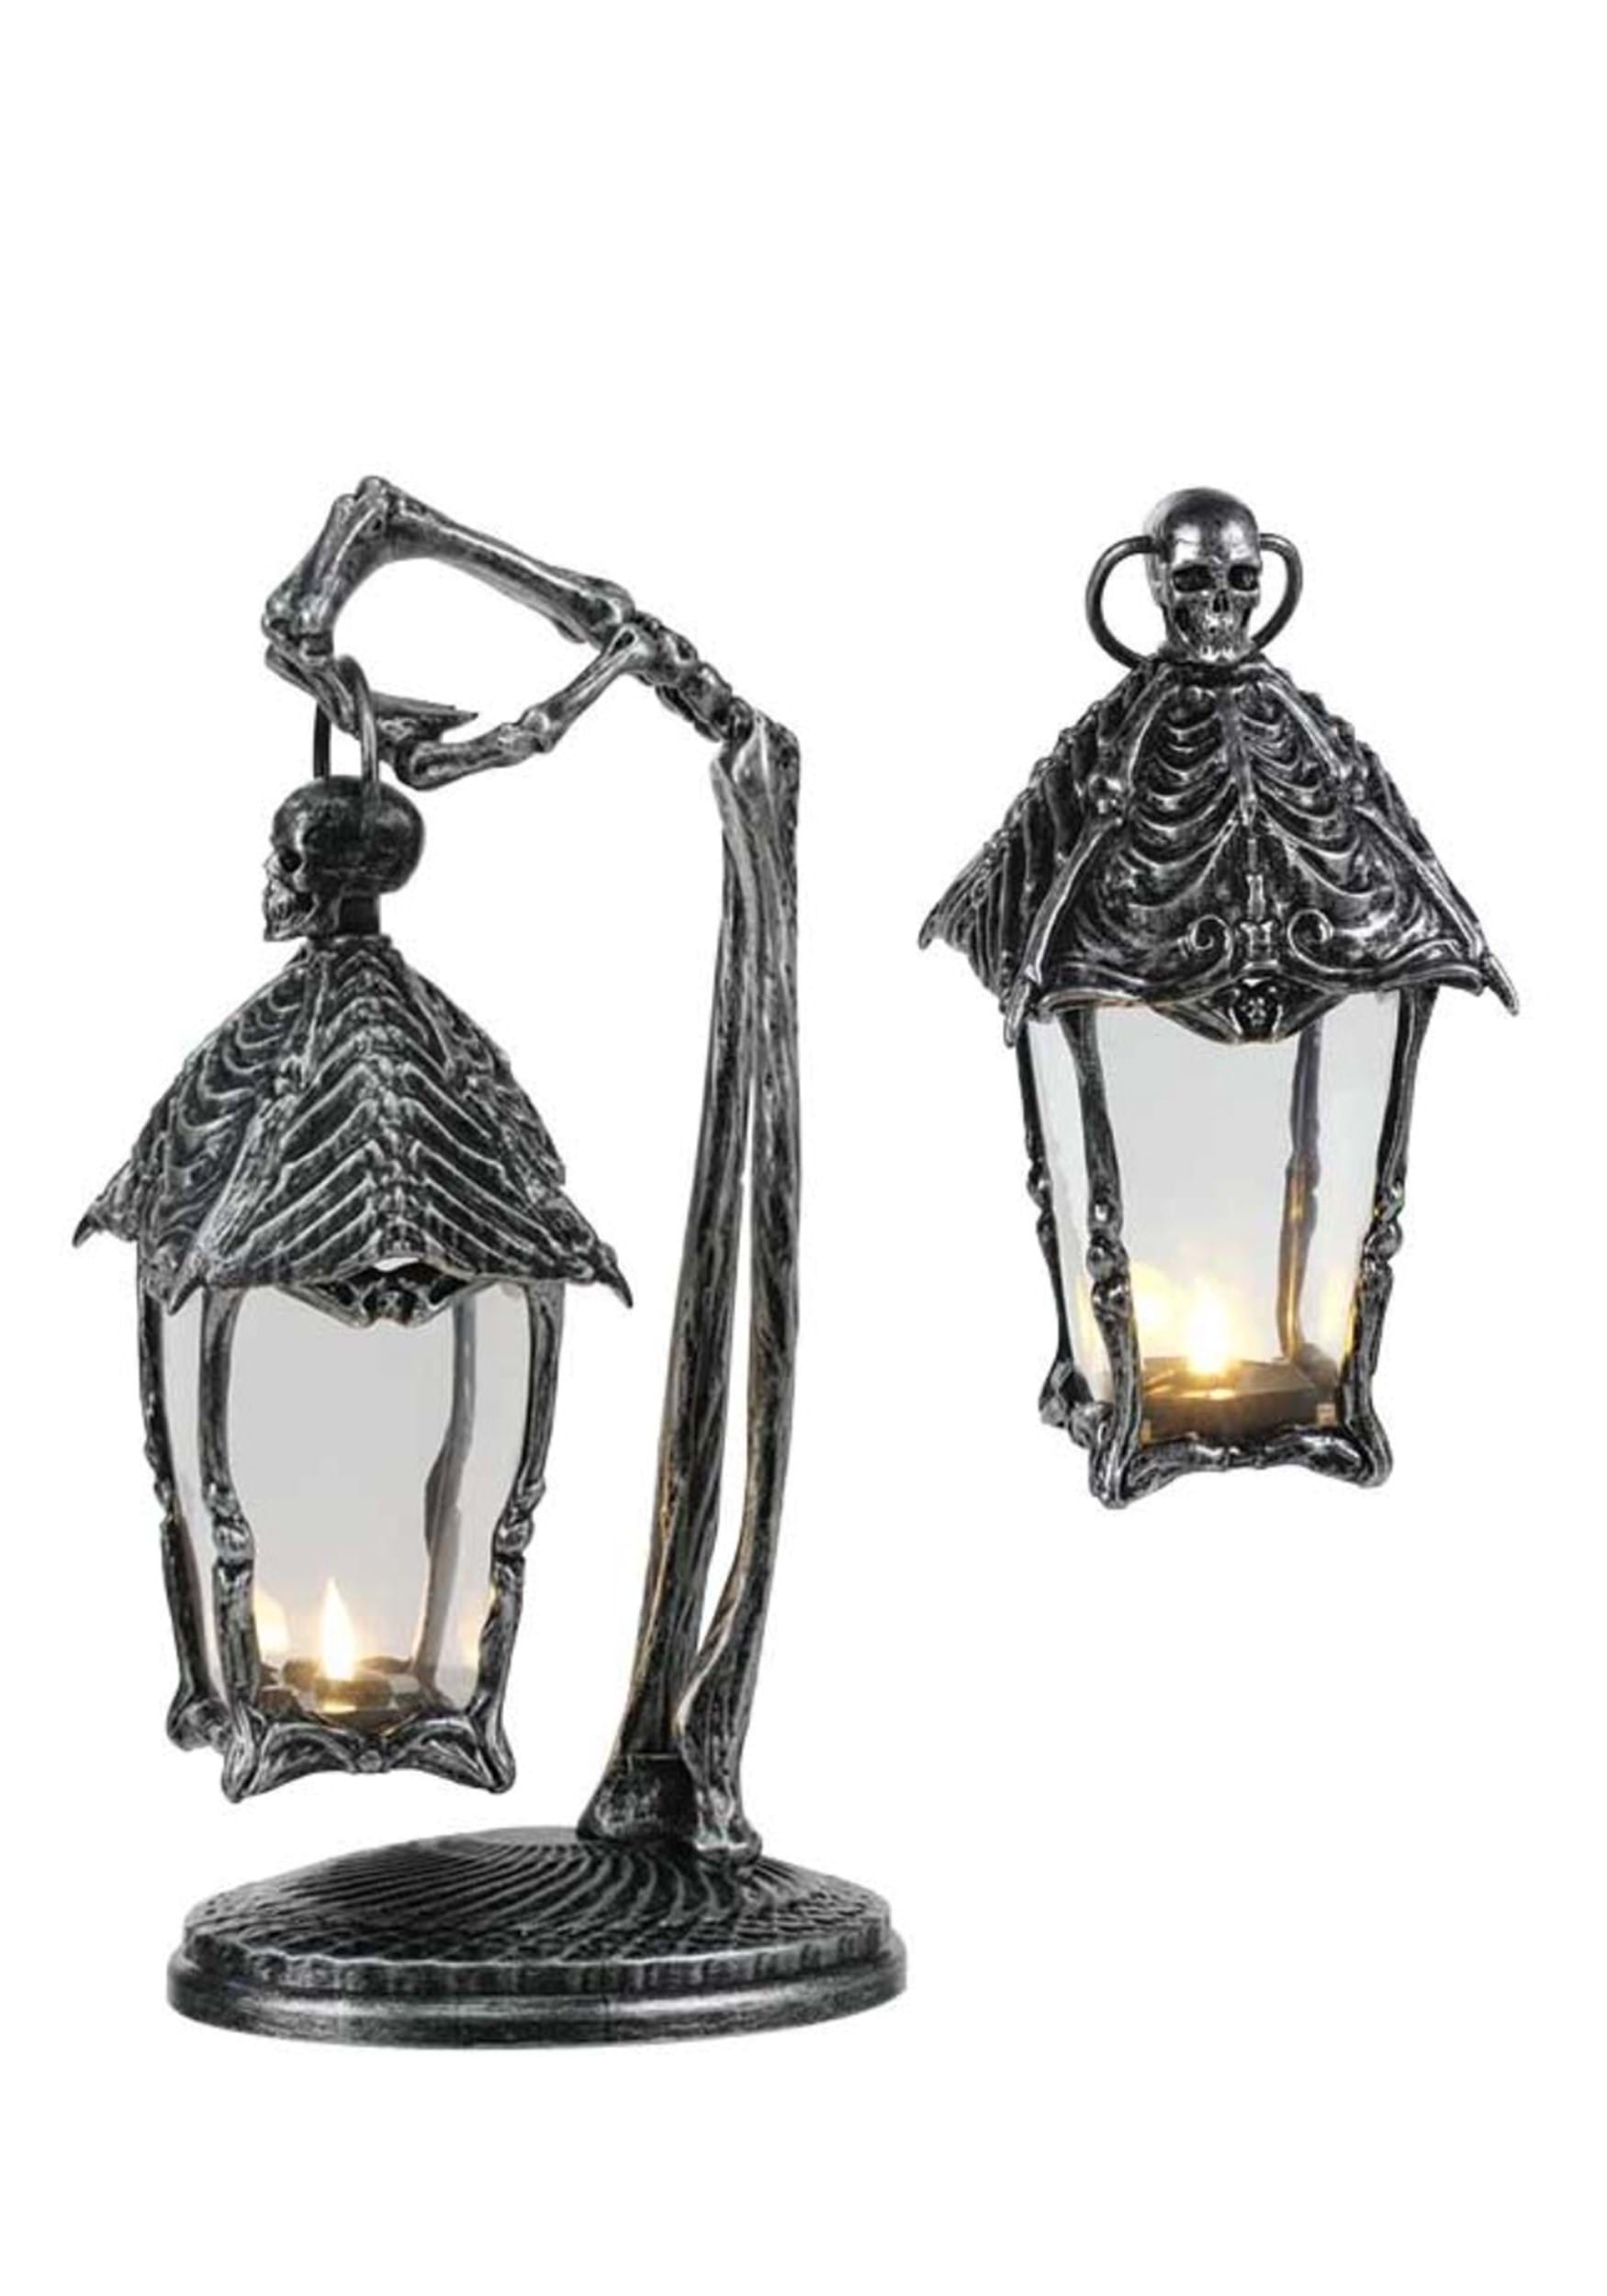 12" Gothic Lantern Decoration